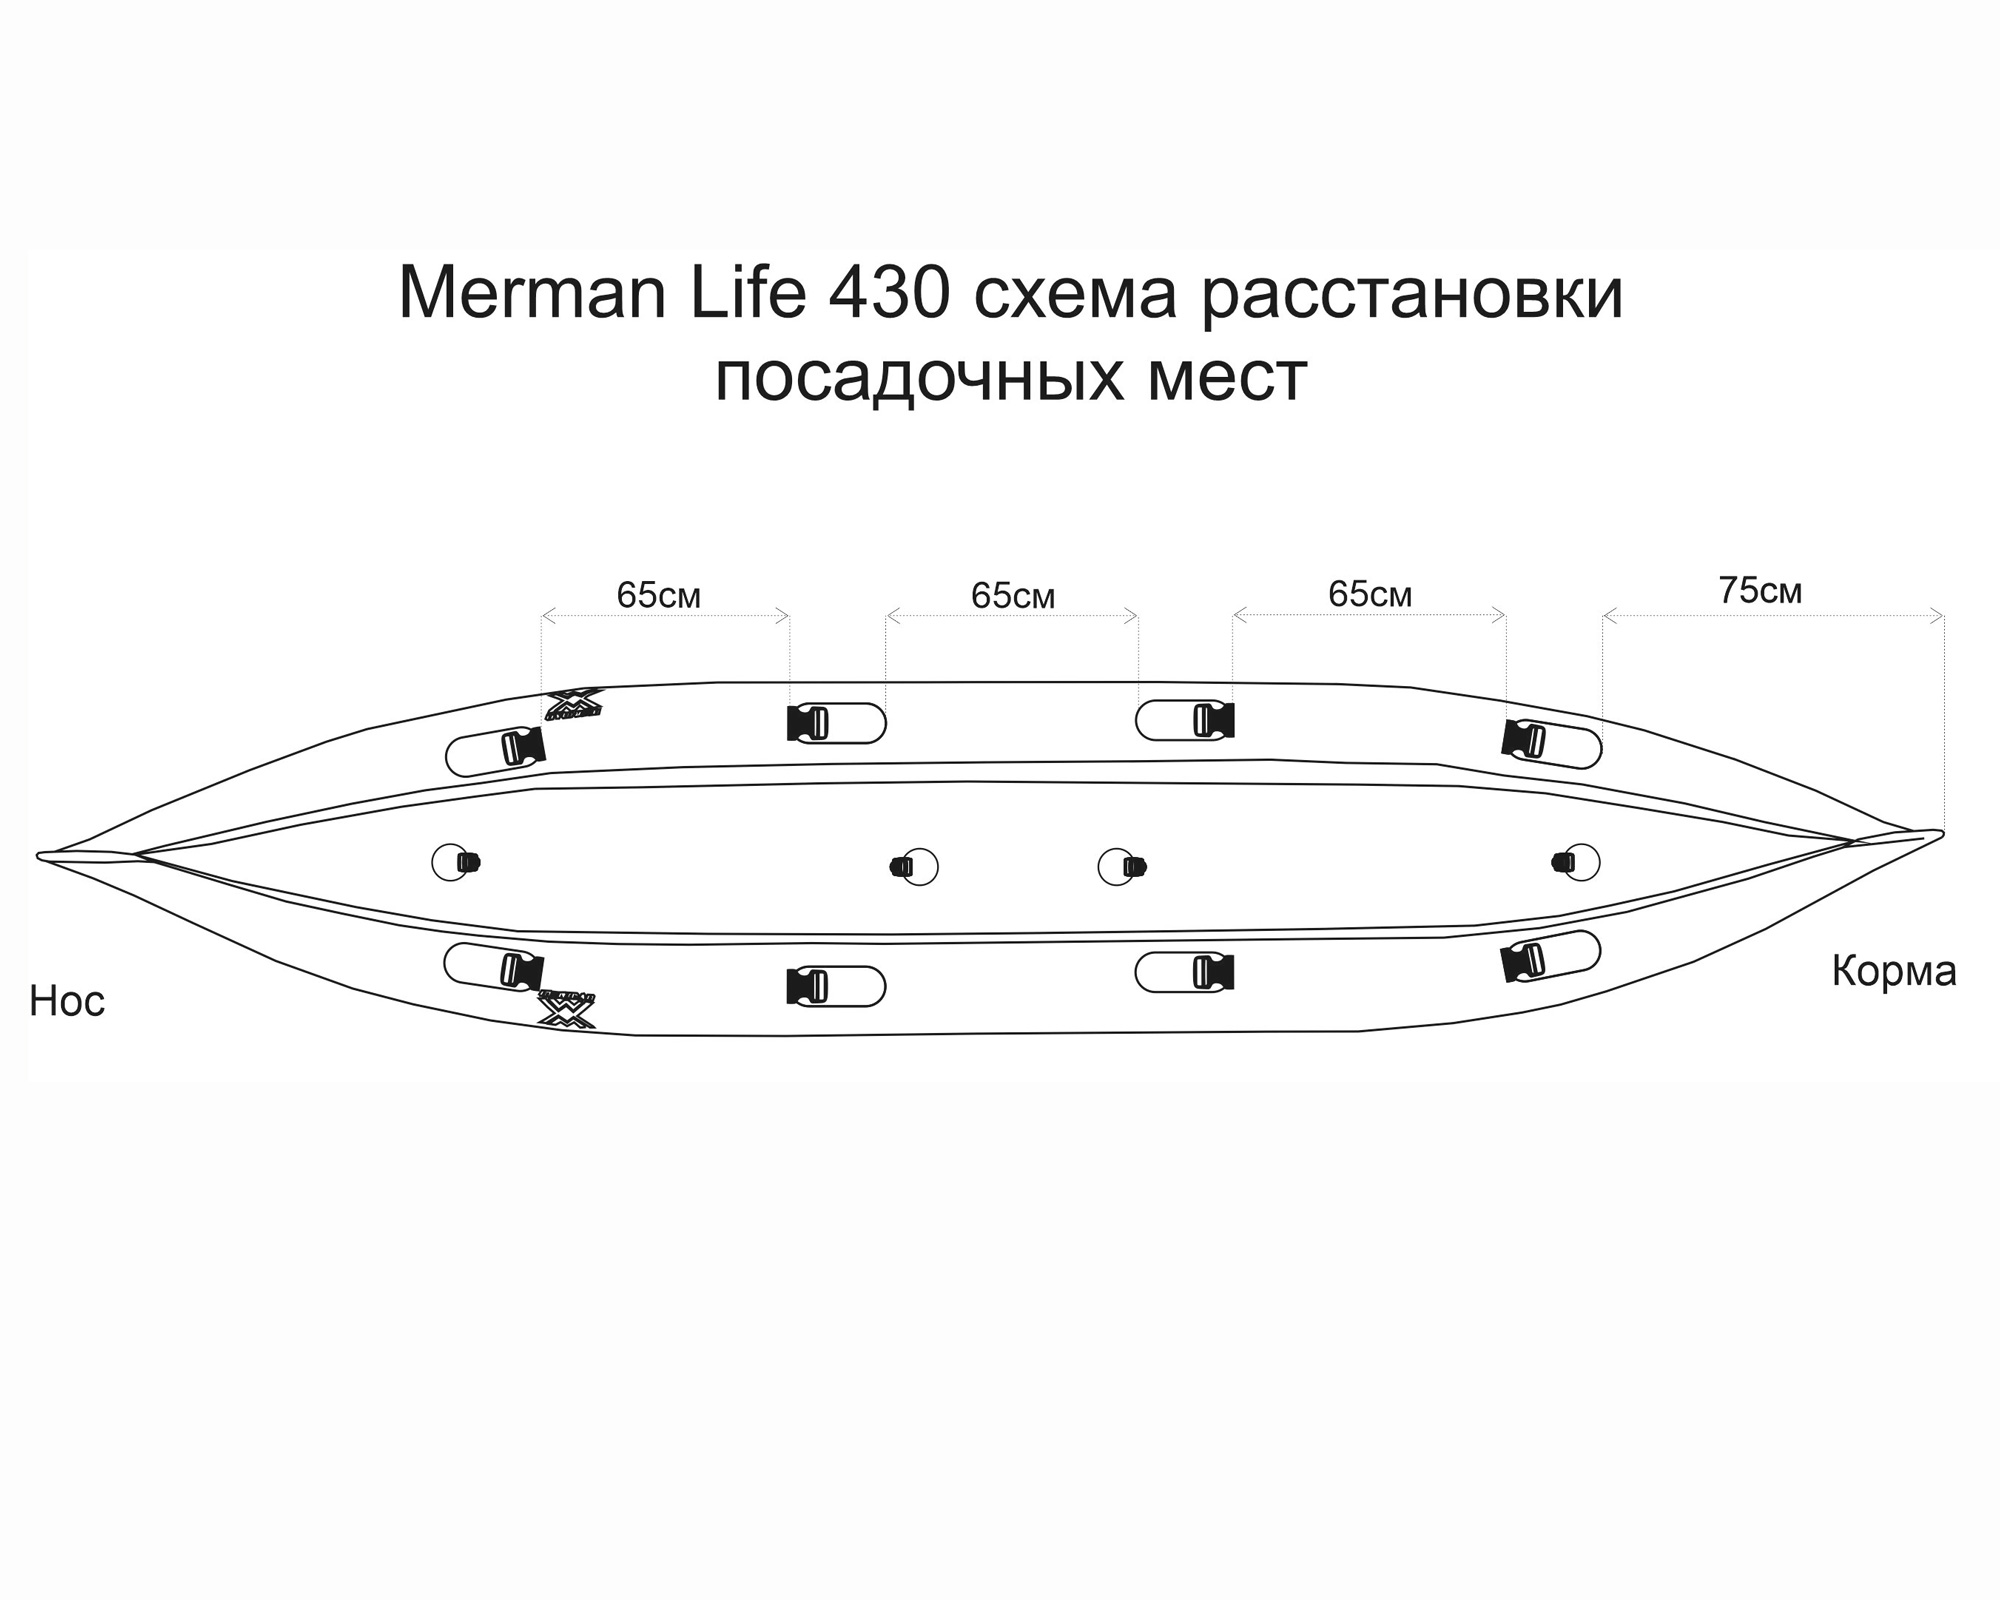 Merman Life 430/2 двухместная байдарка c фартуком, цвет оранжевый